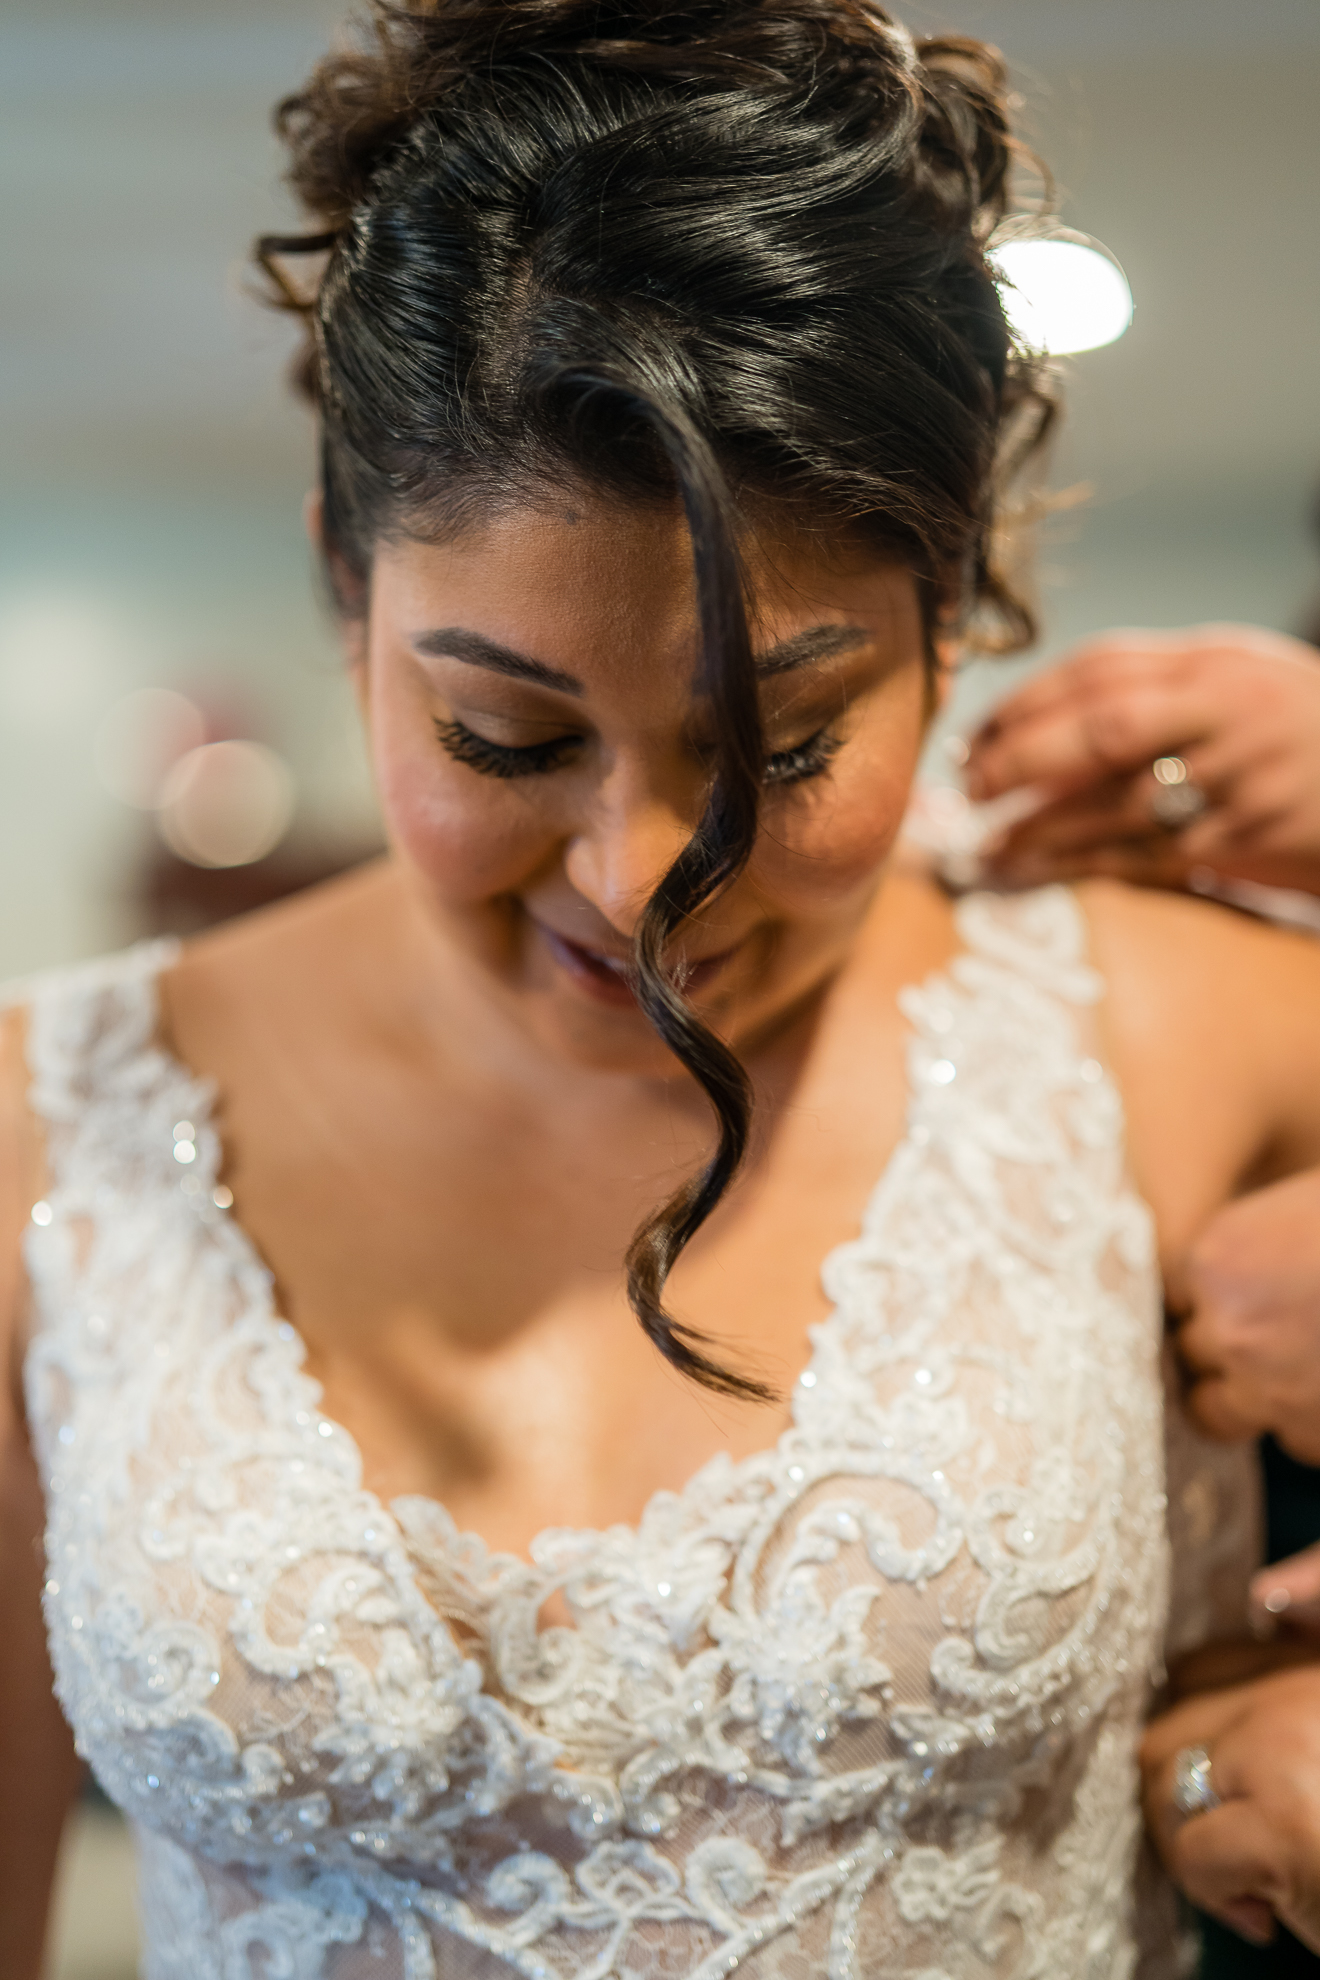 ThomasKim_photography A bride gracefully putting on her stunning wedding dress.